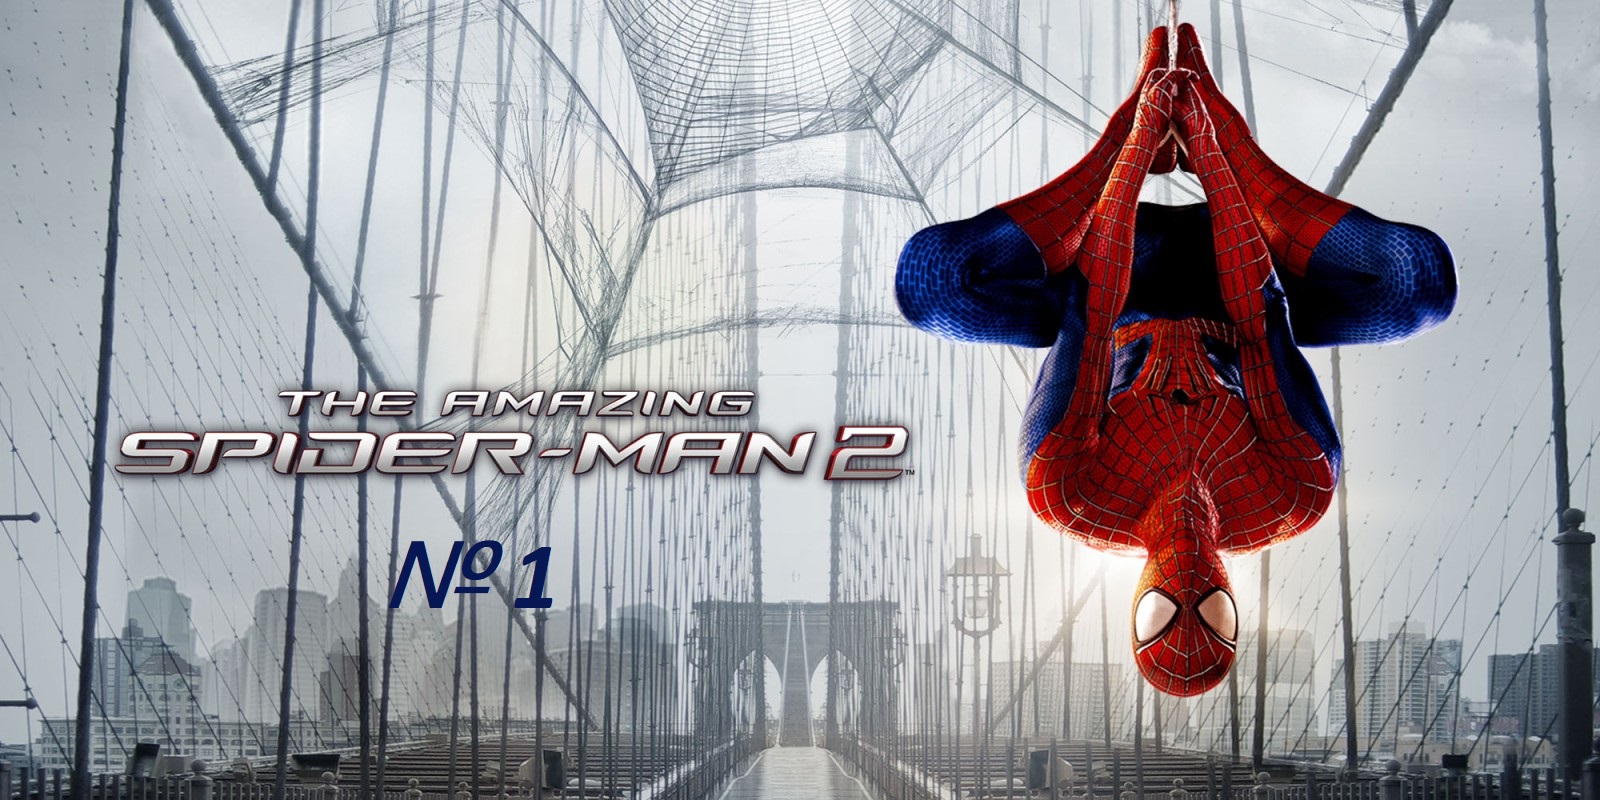 Amazing spider-man 2 - разборки с бандами [#1]